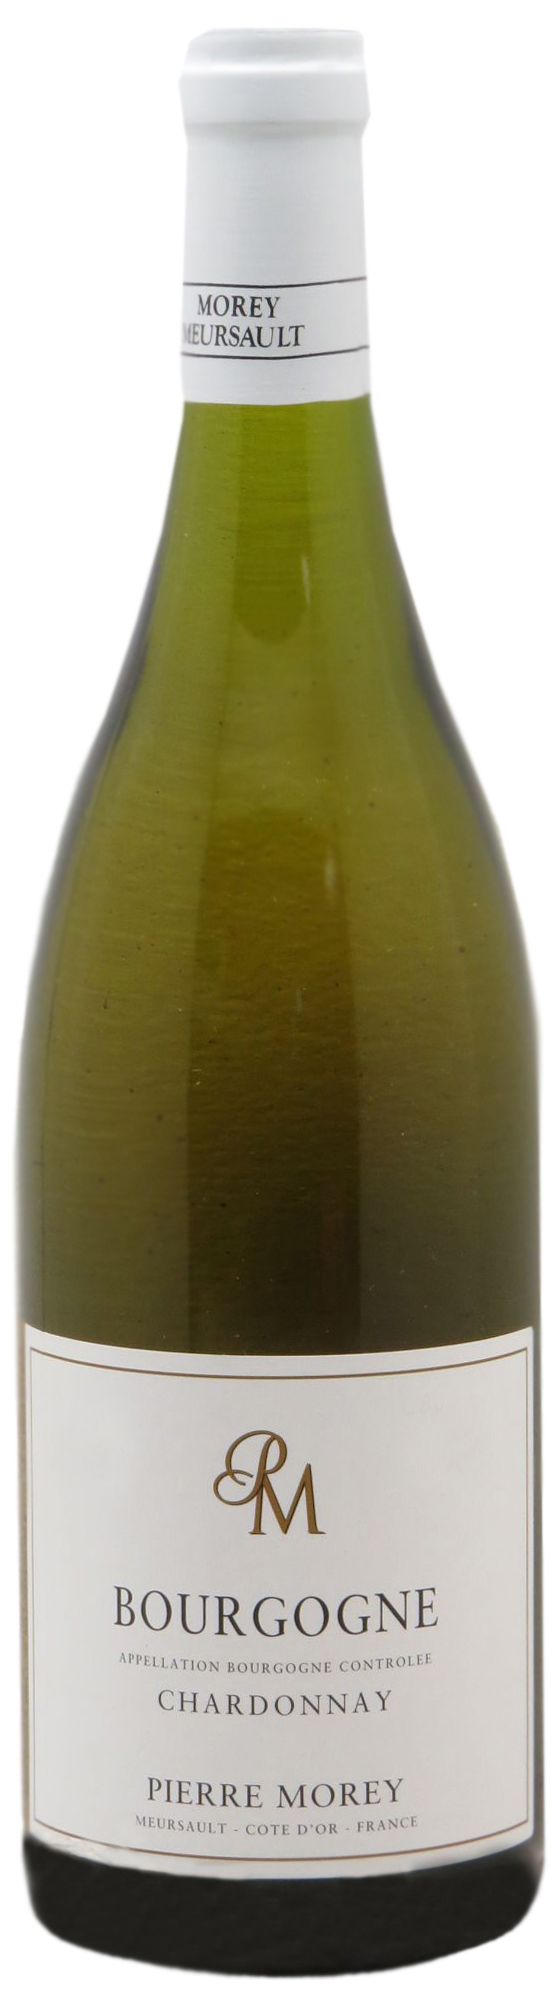 Domaine Pierre Morey & Morey-Blanc, Bourgogne Chardonnay, 2010